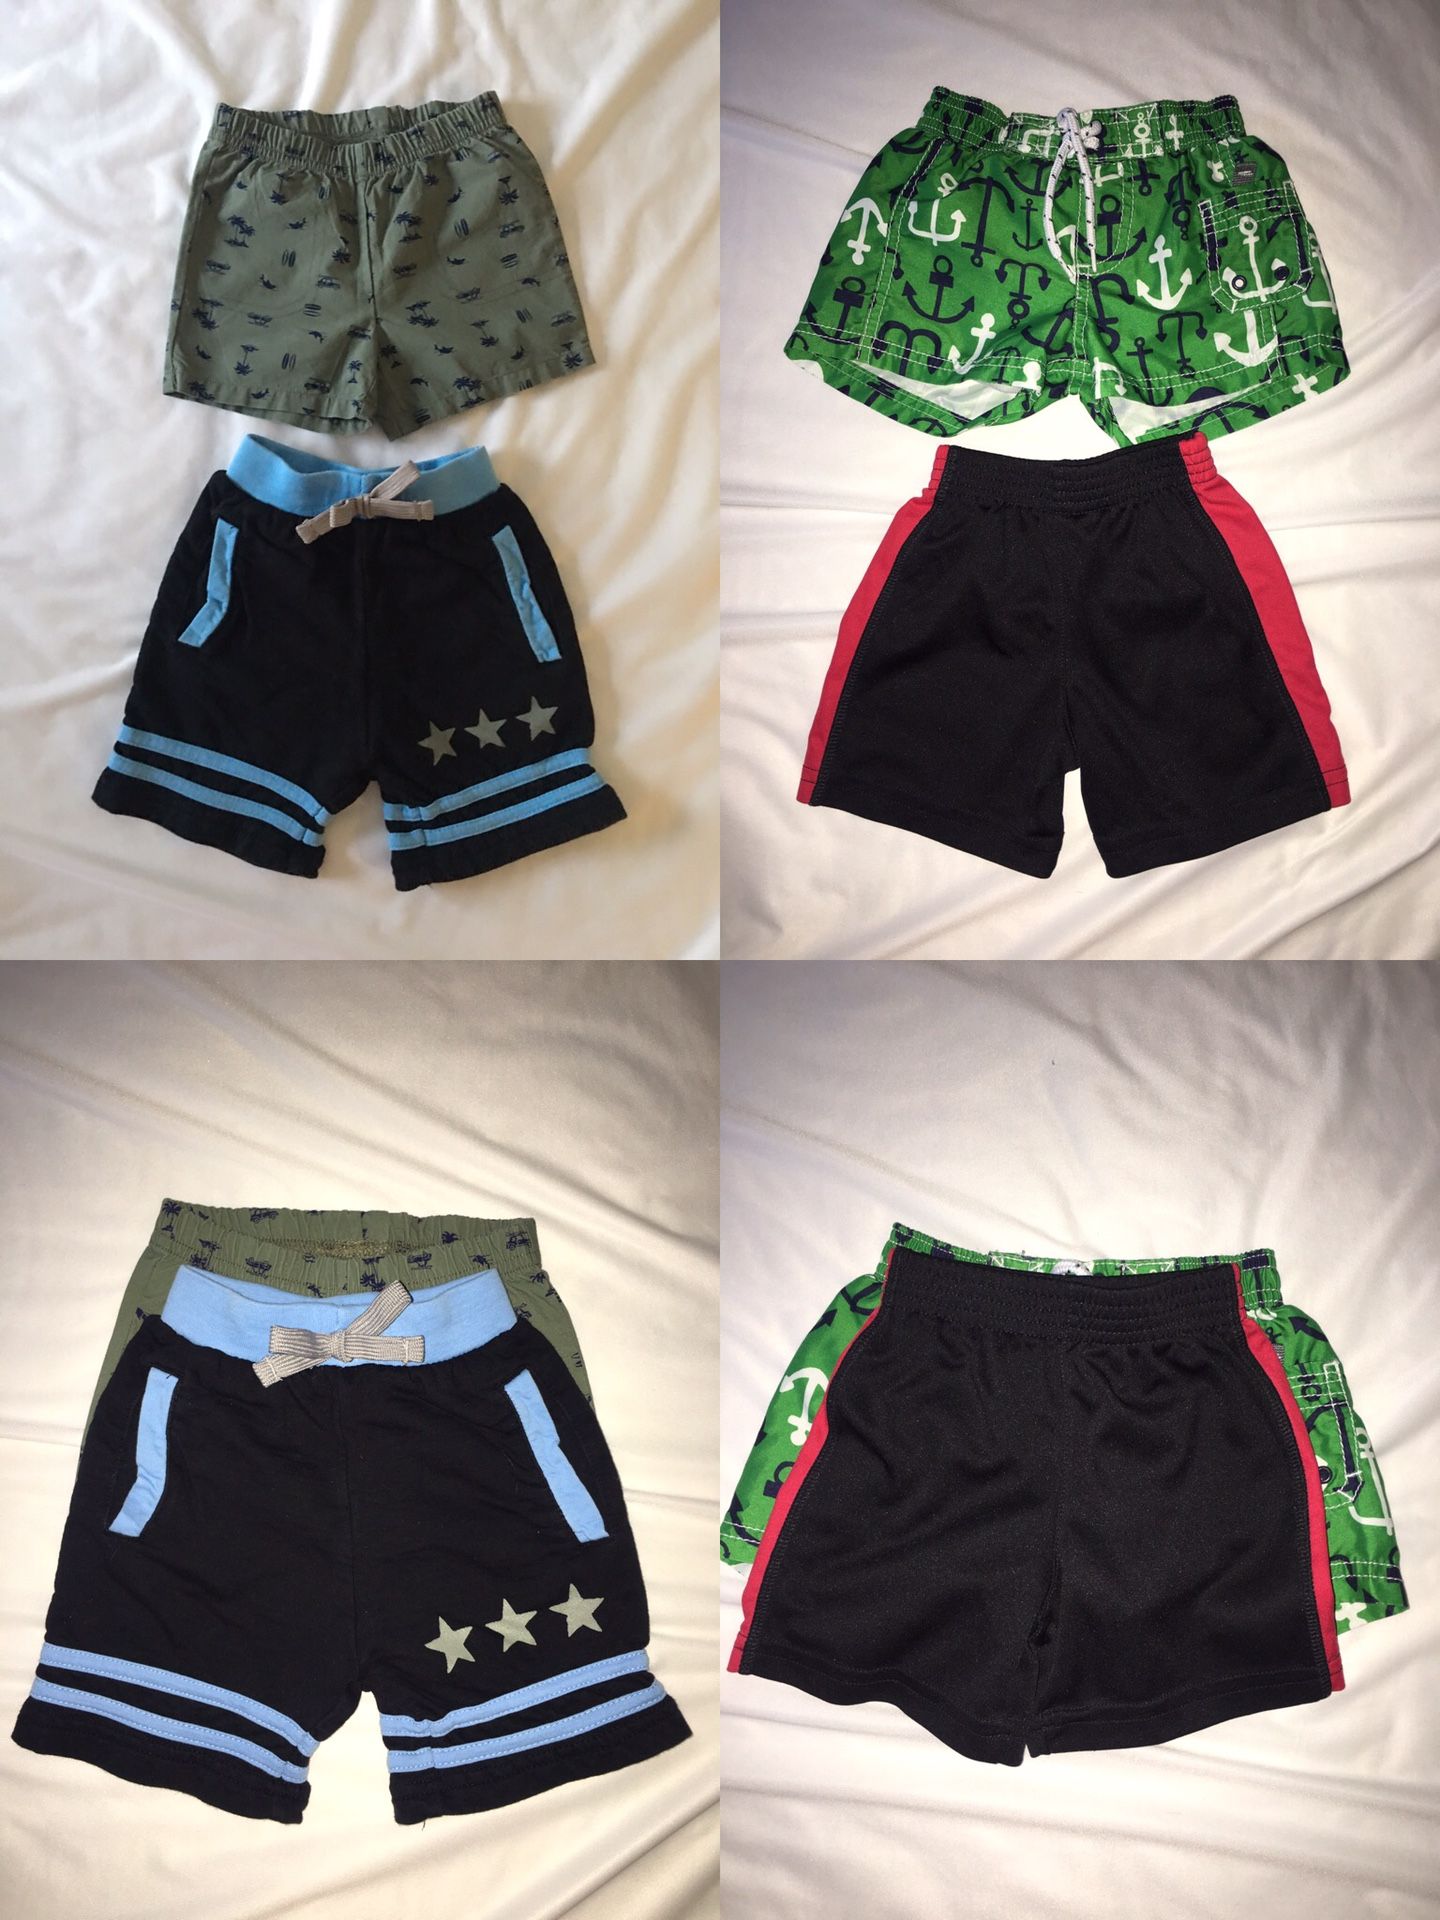 Baby boy shorts clothes set 6-12 months Carter’s